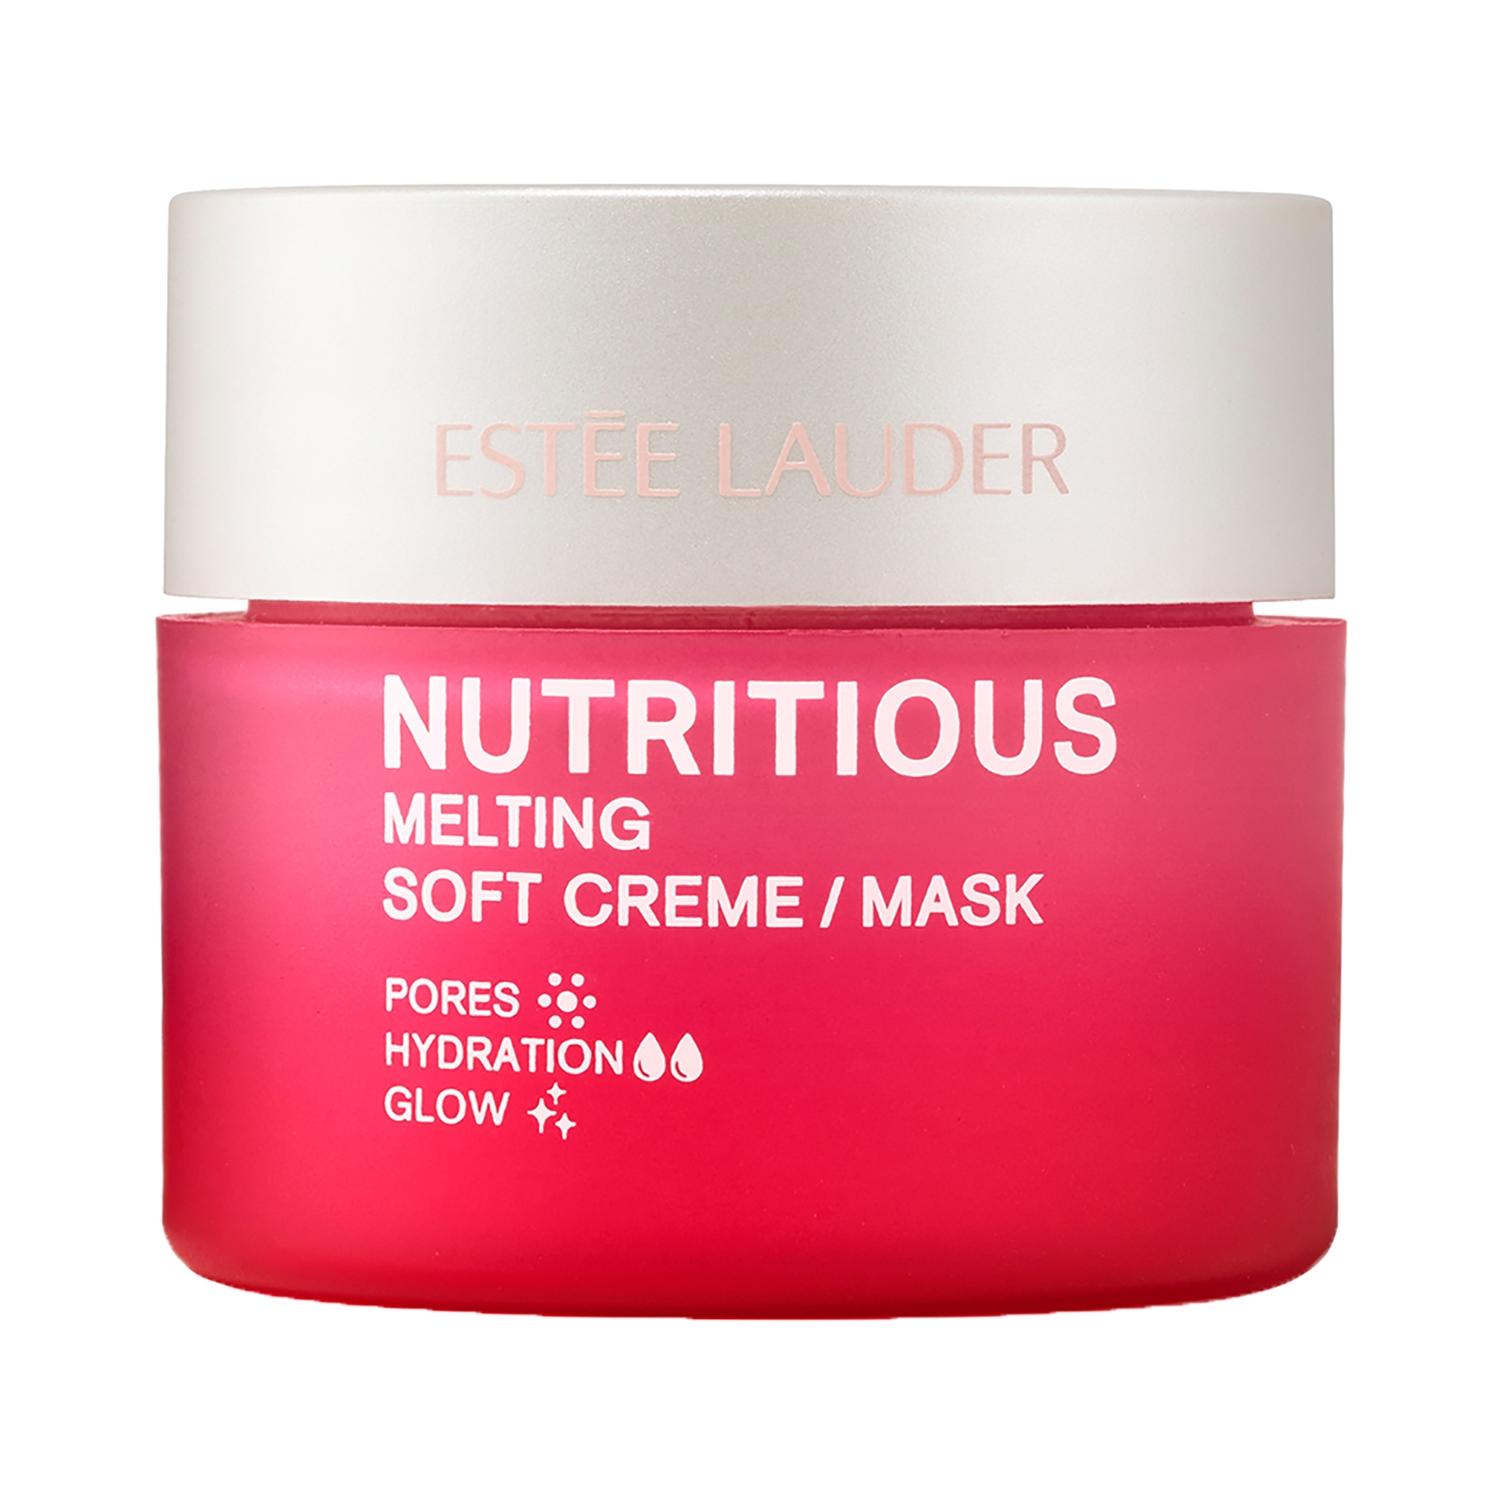 estee lauder nutritious melting soft creme/mask moisturizer (15ml)